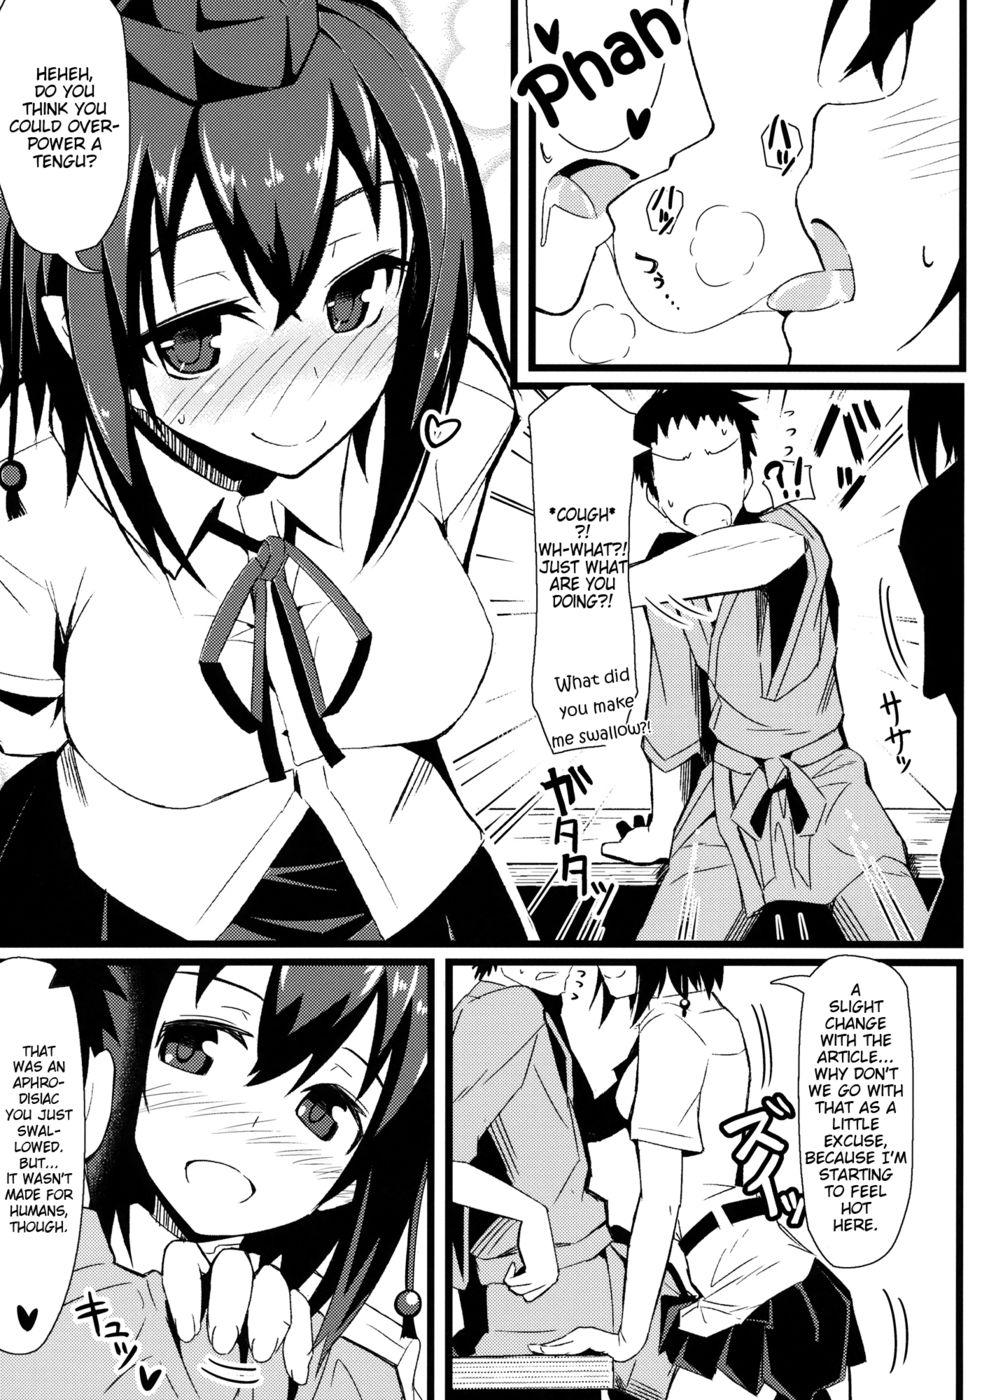 Hentai Manga Comic-GIRLFriend's 3-Read-4